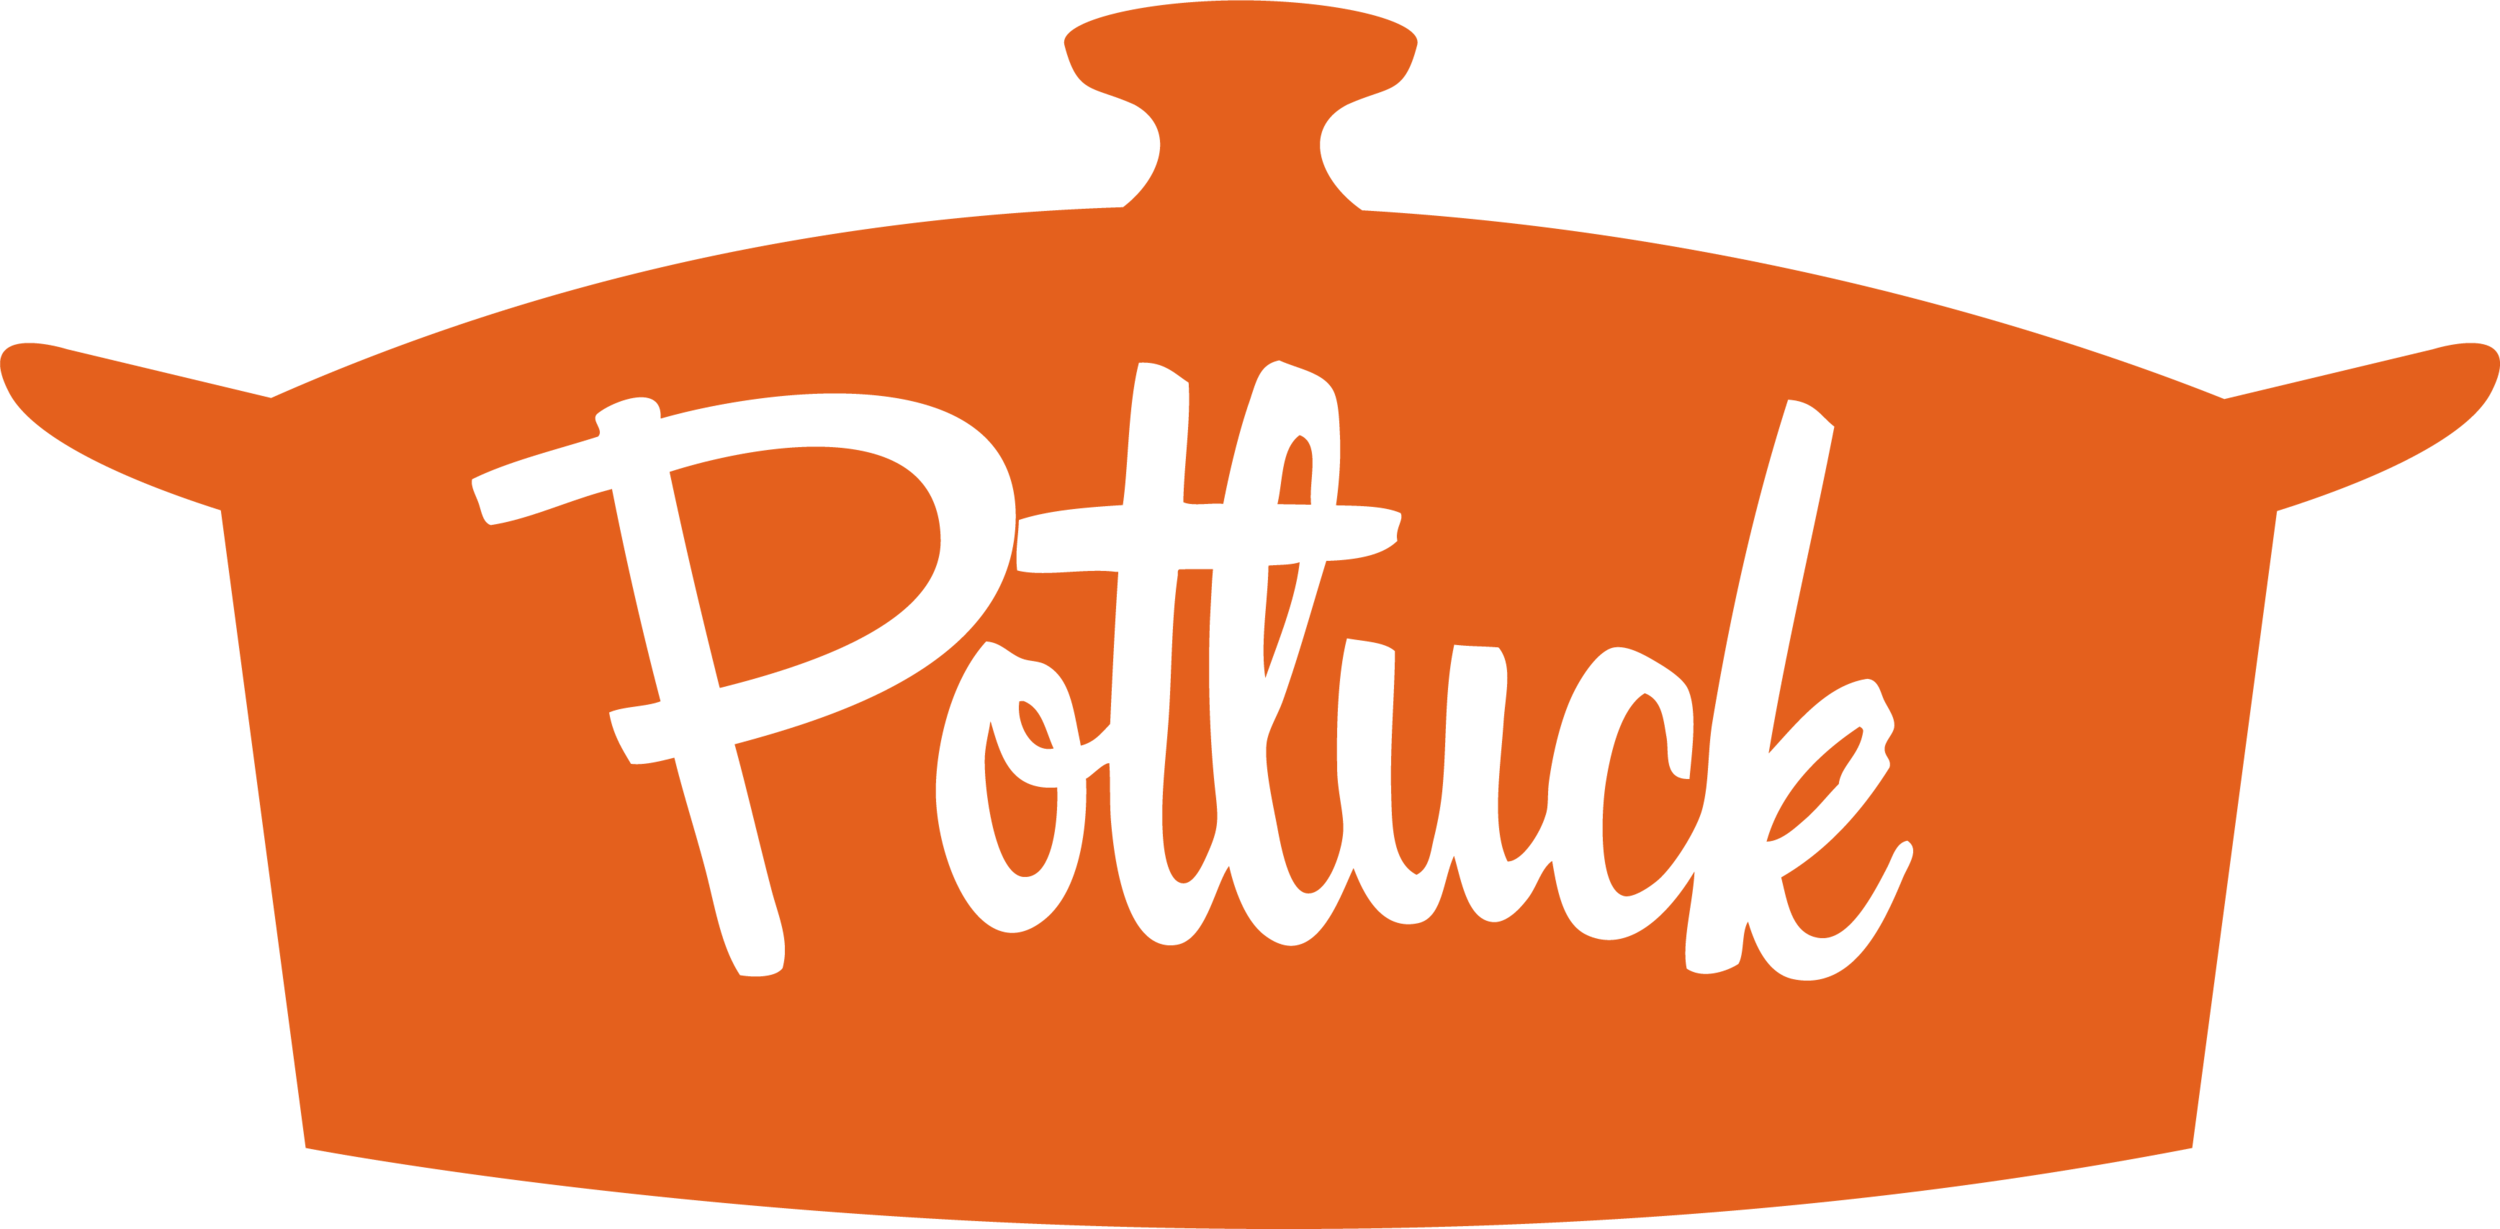 Potluck - Italian Theme